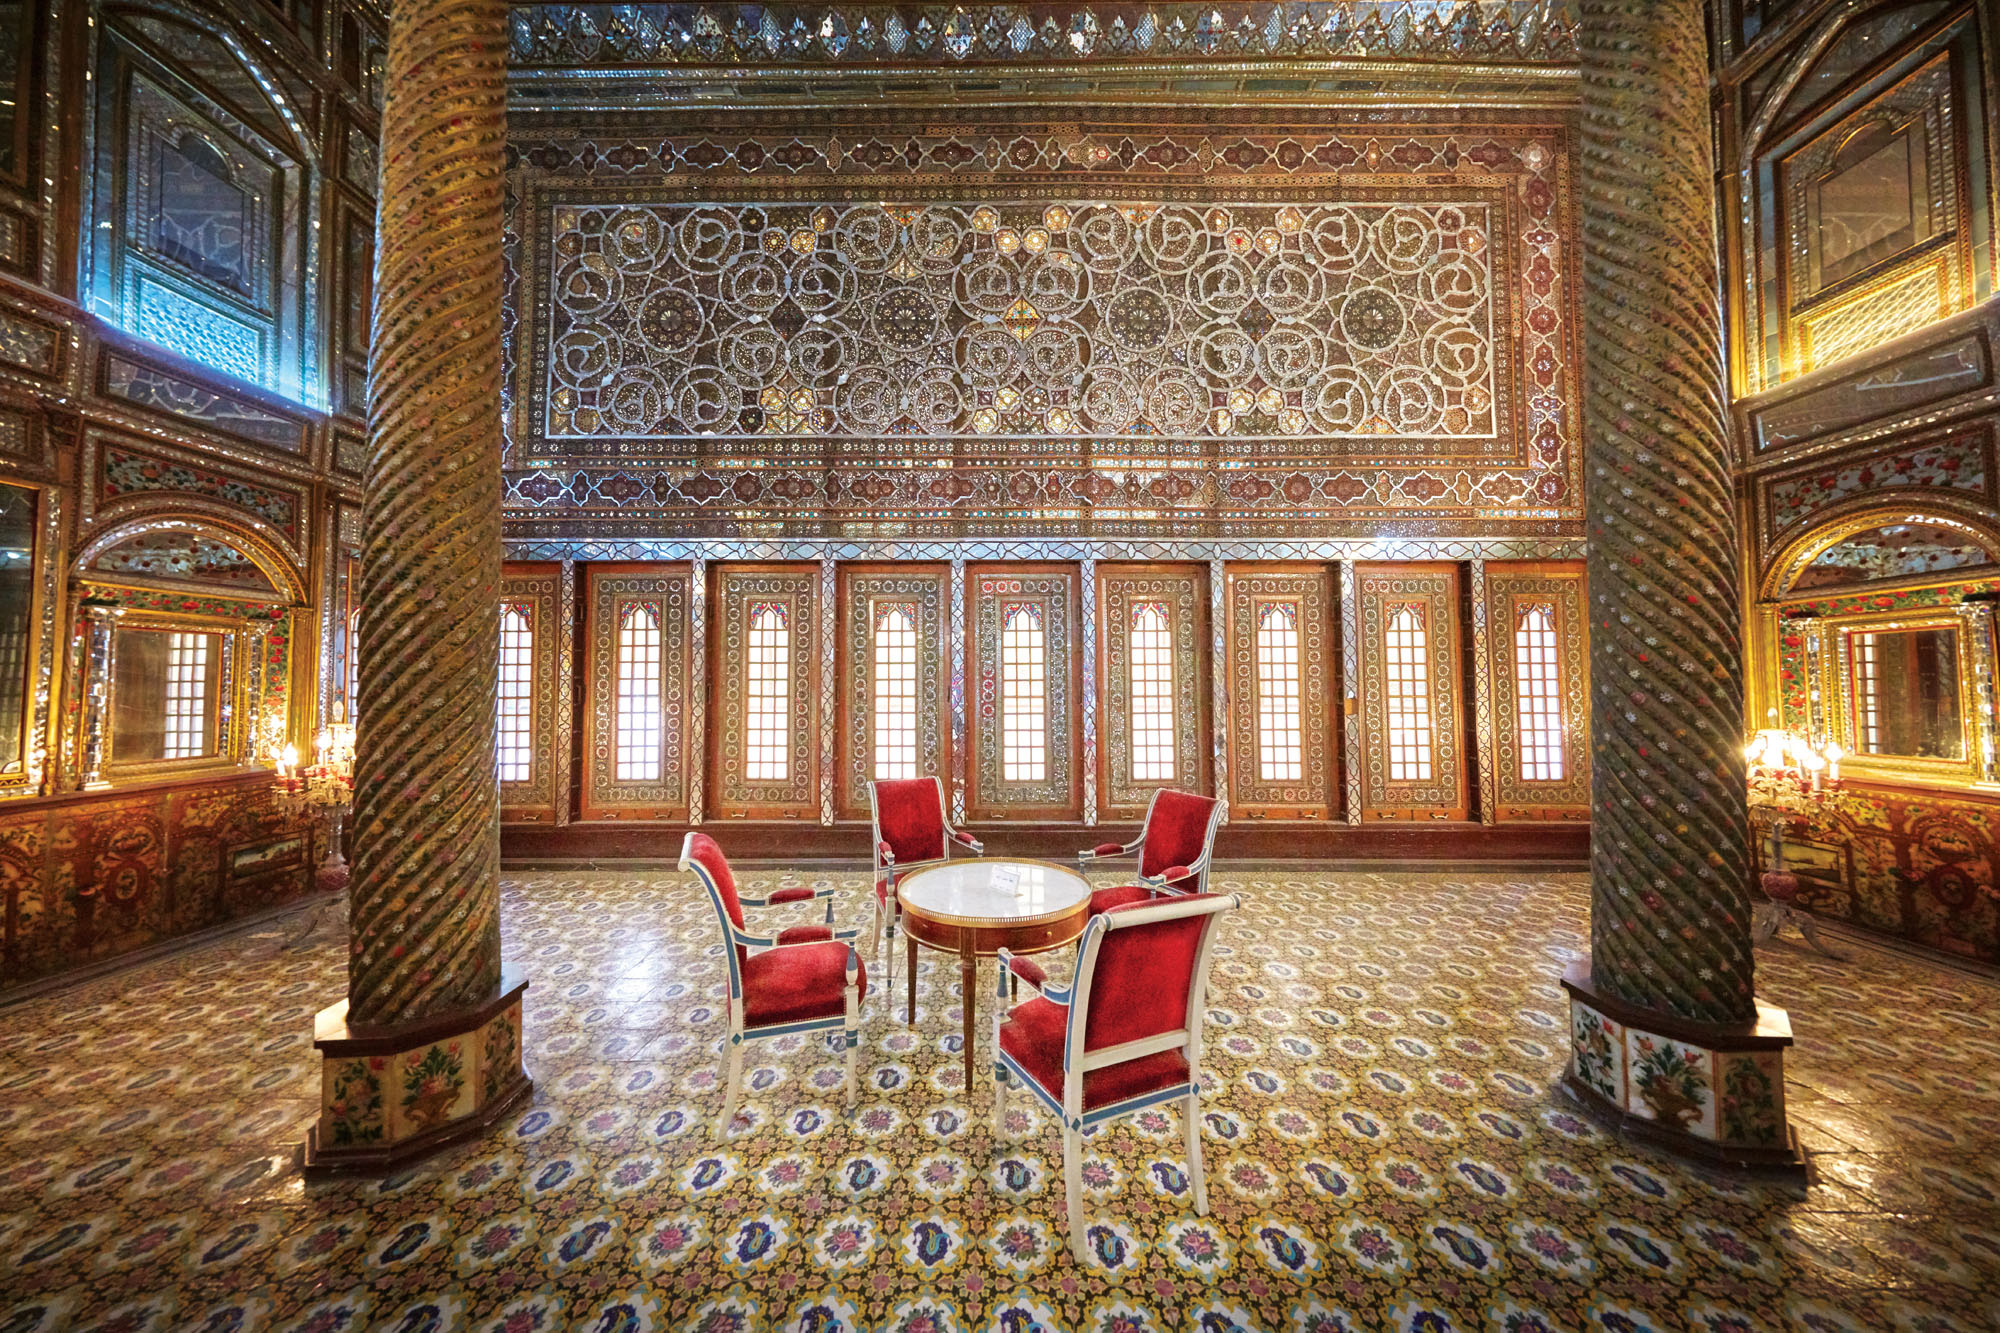 Golestan Palace, Tehran, Iran. Canon EOS 5DSR, 11-14mm lens, f5 @ 1/40 second, ISO 3200.